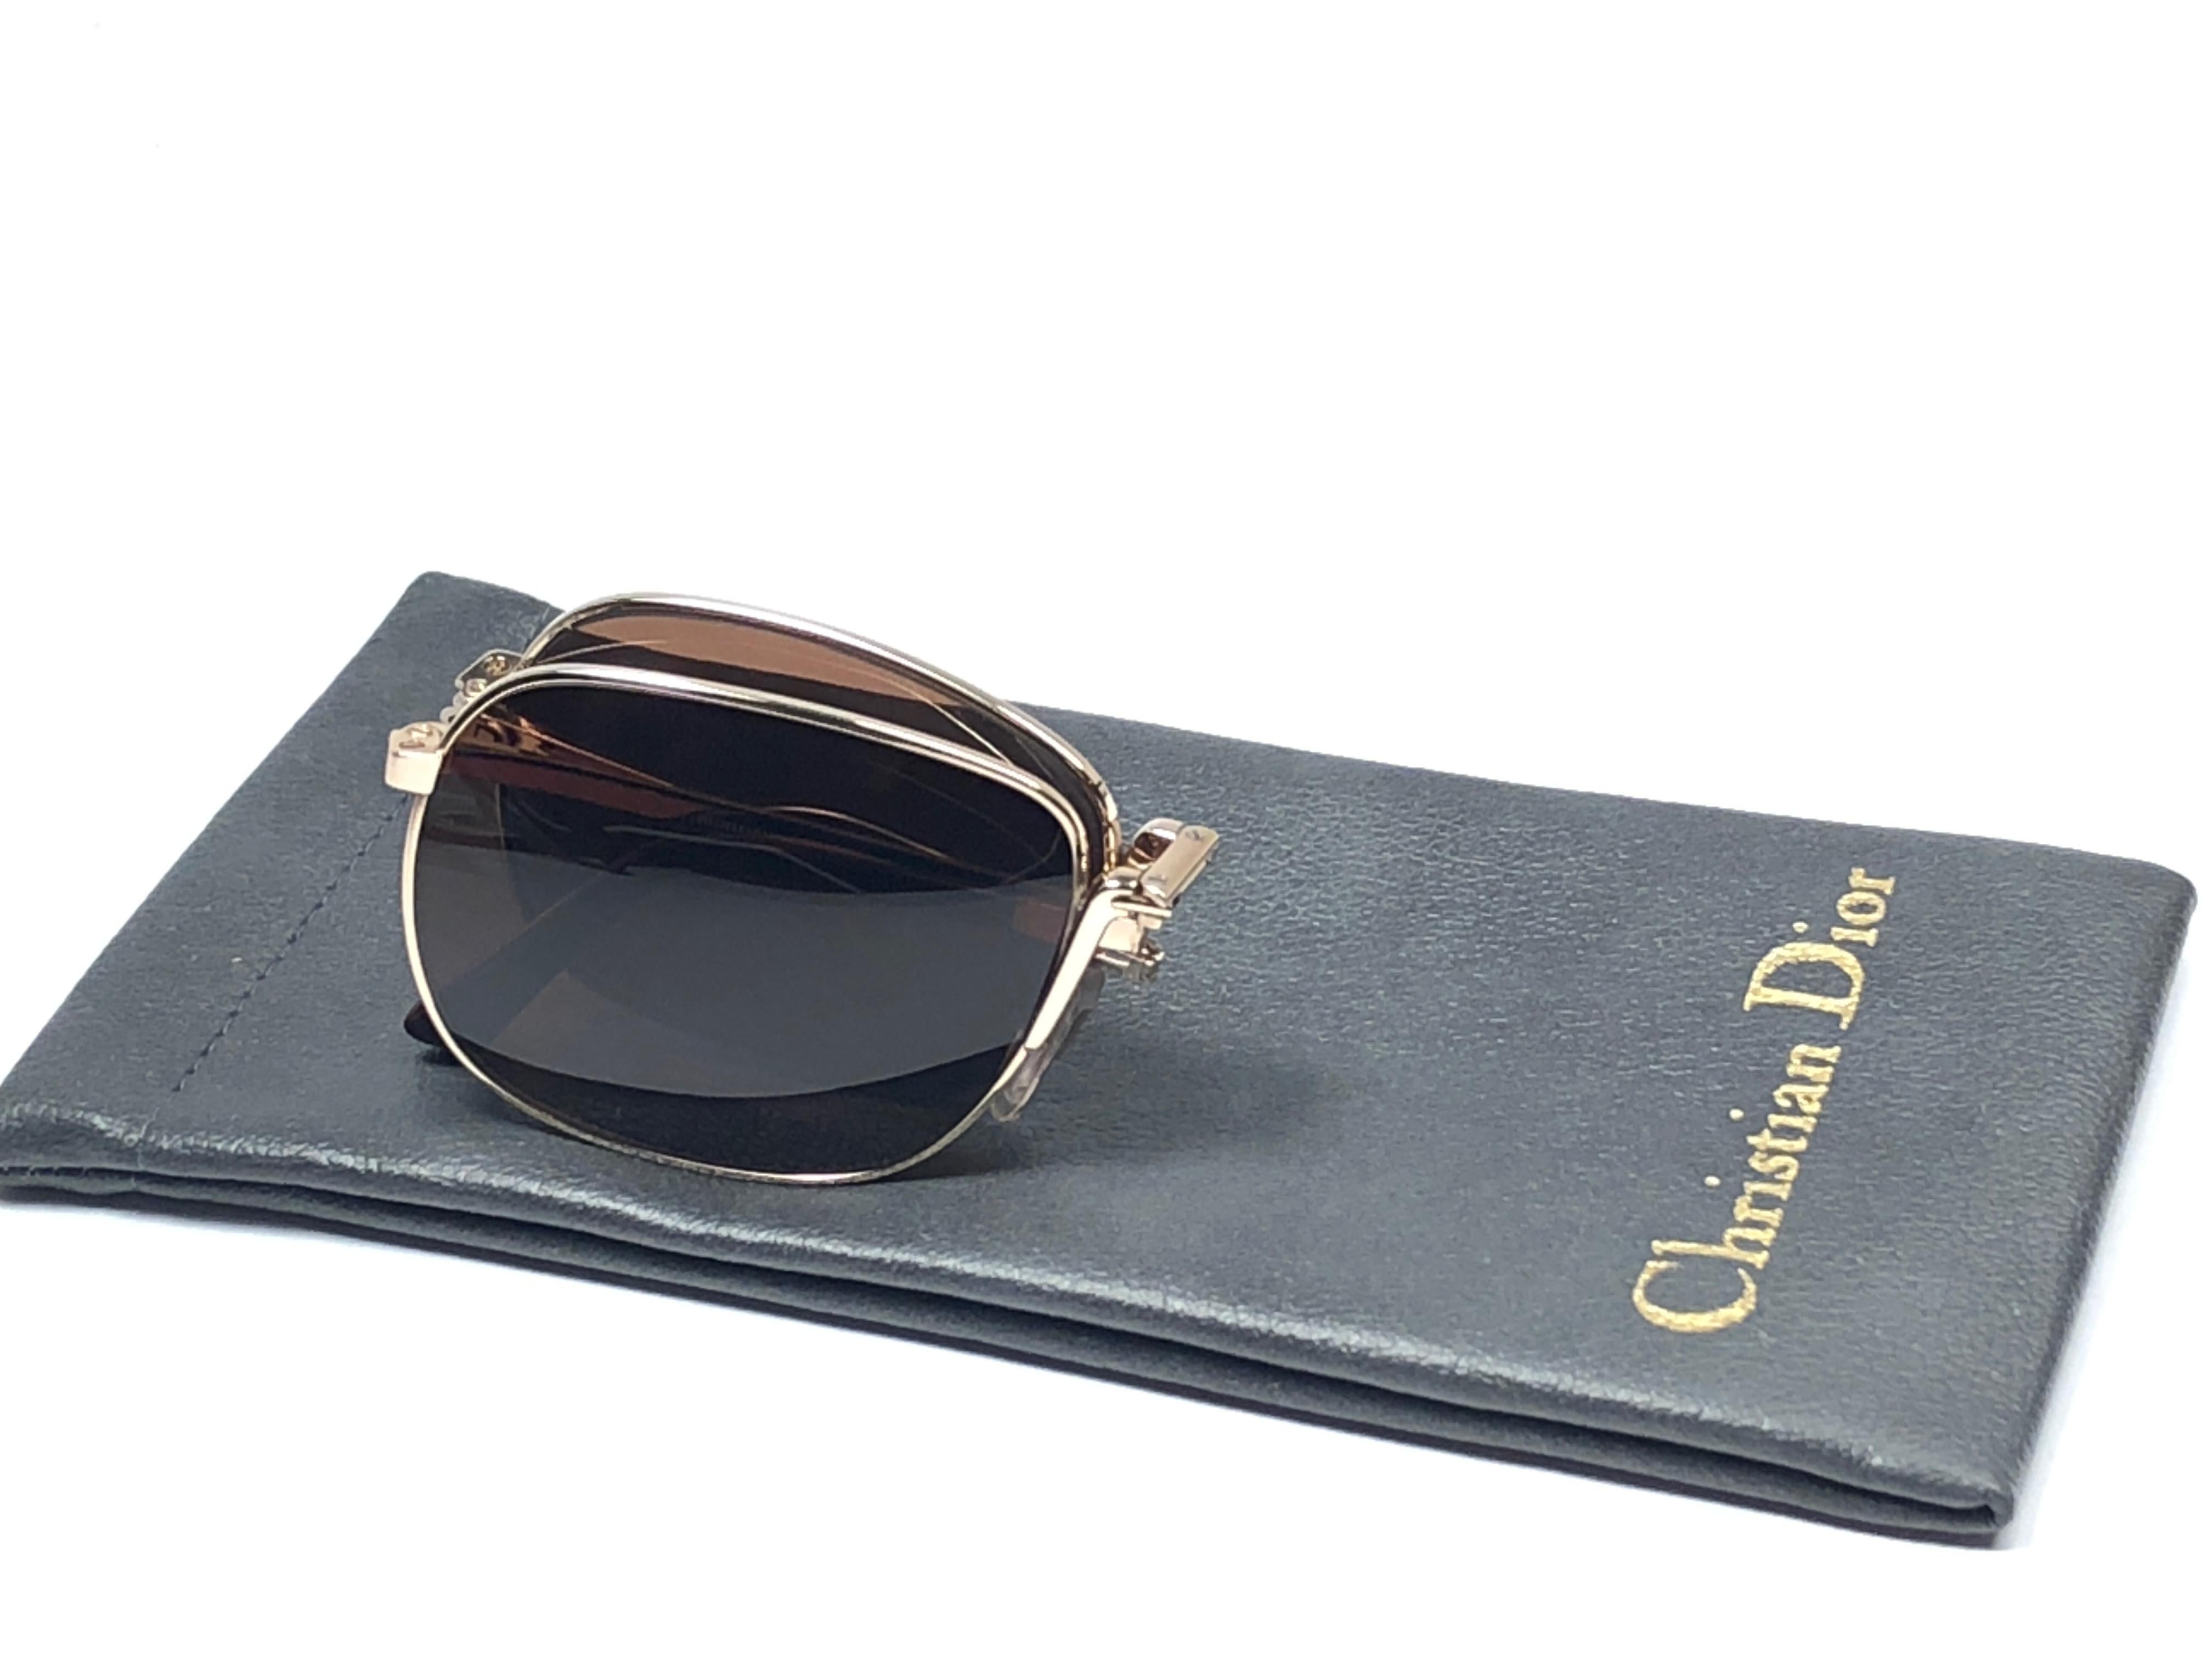 New Vintage Christian Dior Monsieur 2288 Folding Brown Sunglasses 1970's Austria 1